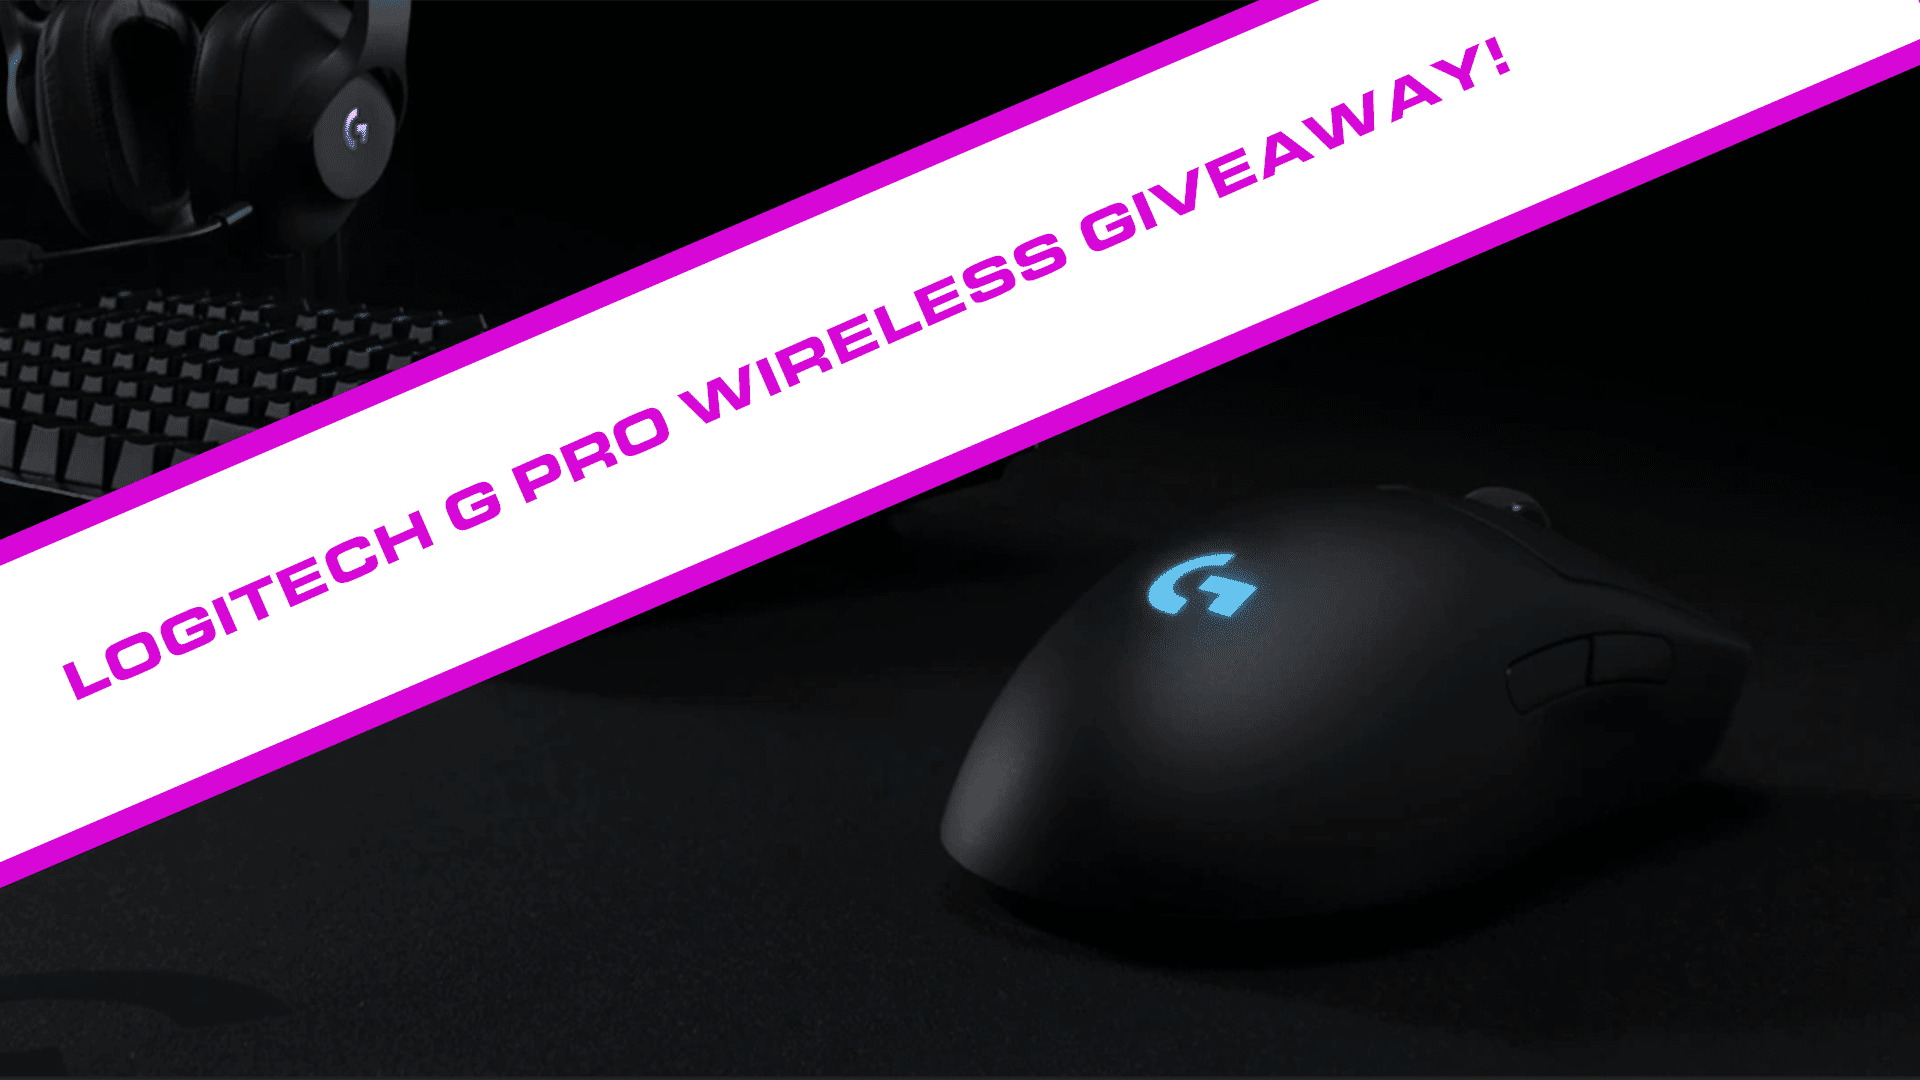 Win Logitech G Pro Wireless Mouse Giveaway